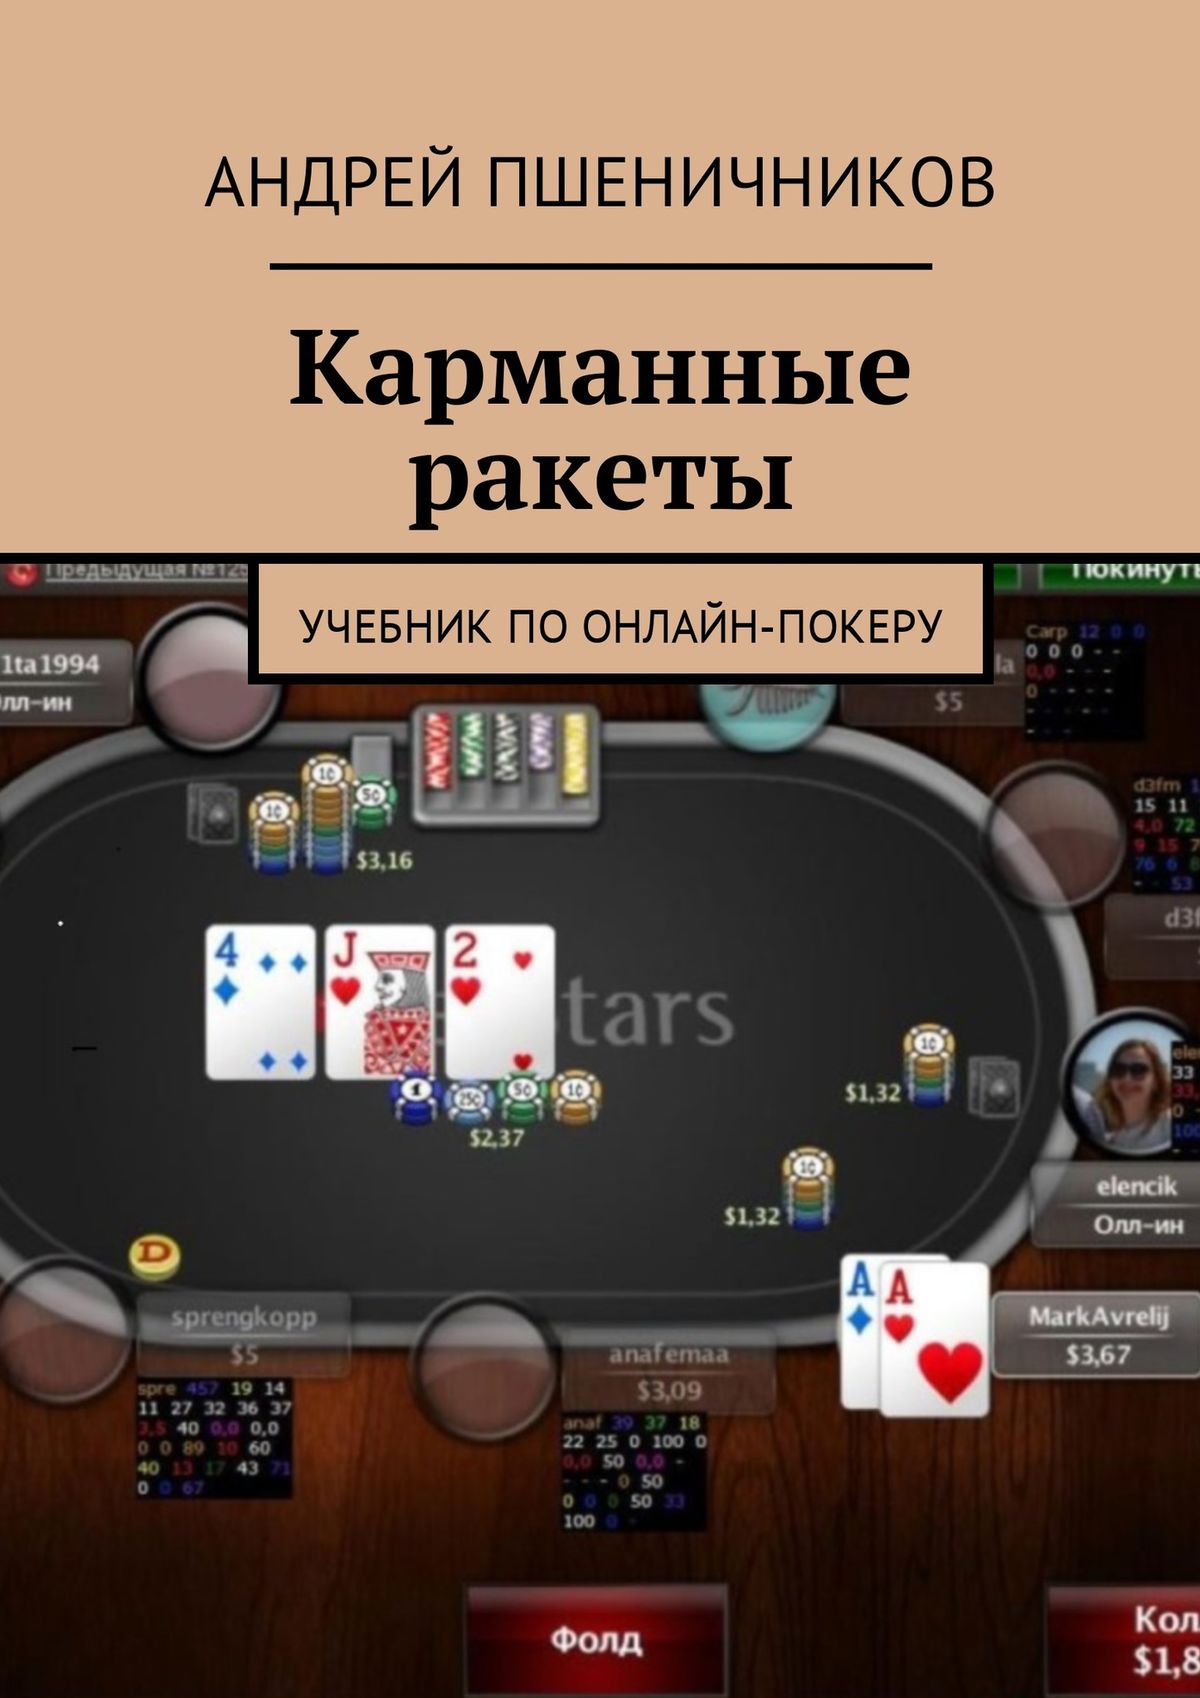 Книги онлайн покеру скачать бесплатно онлайн чат рулетка 18 бонго